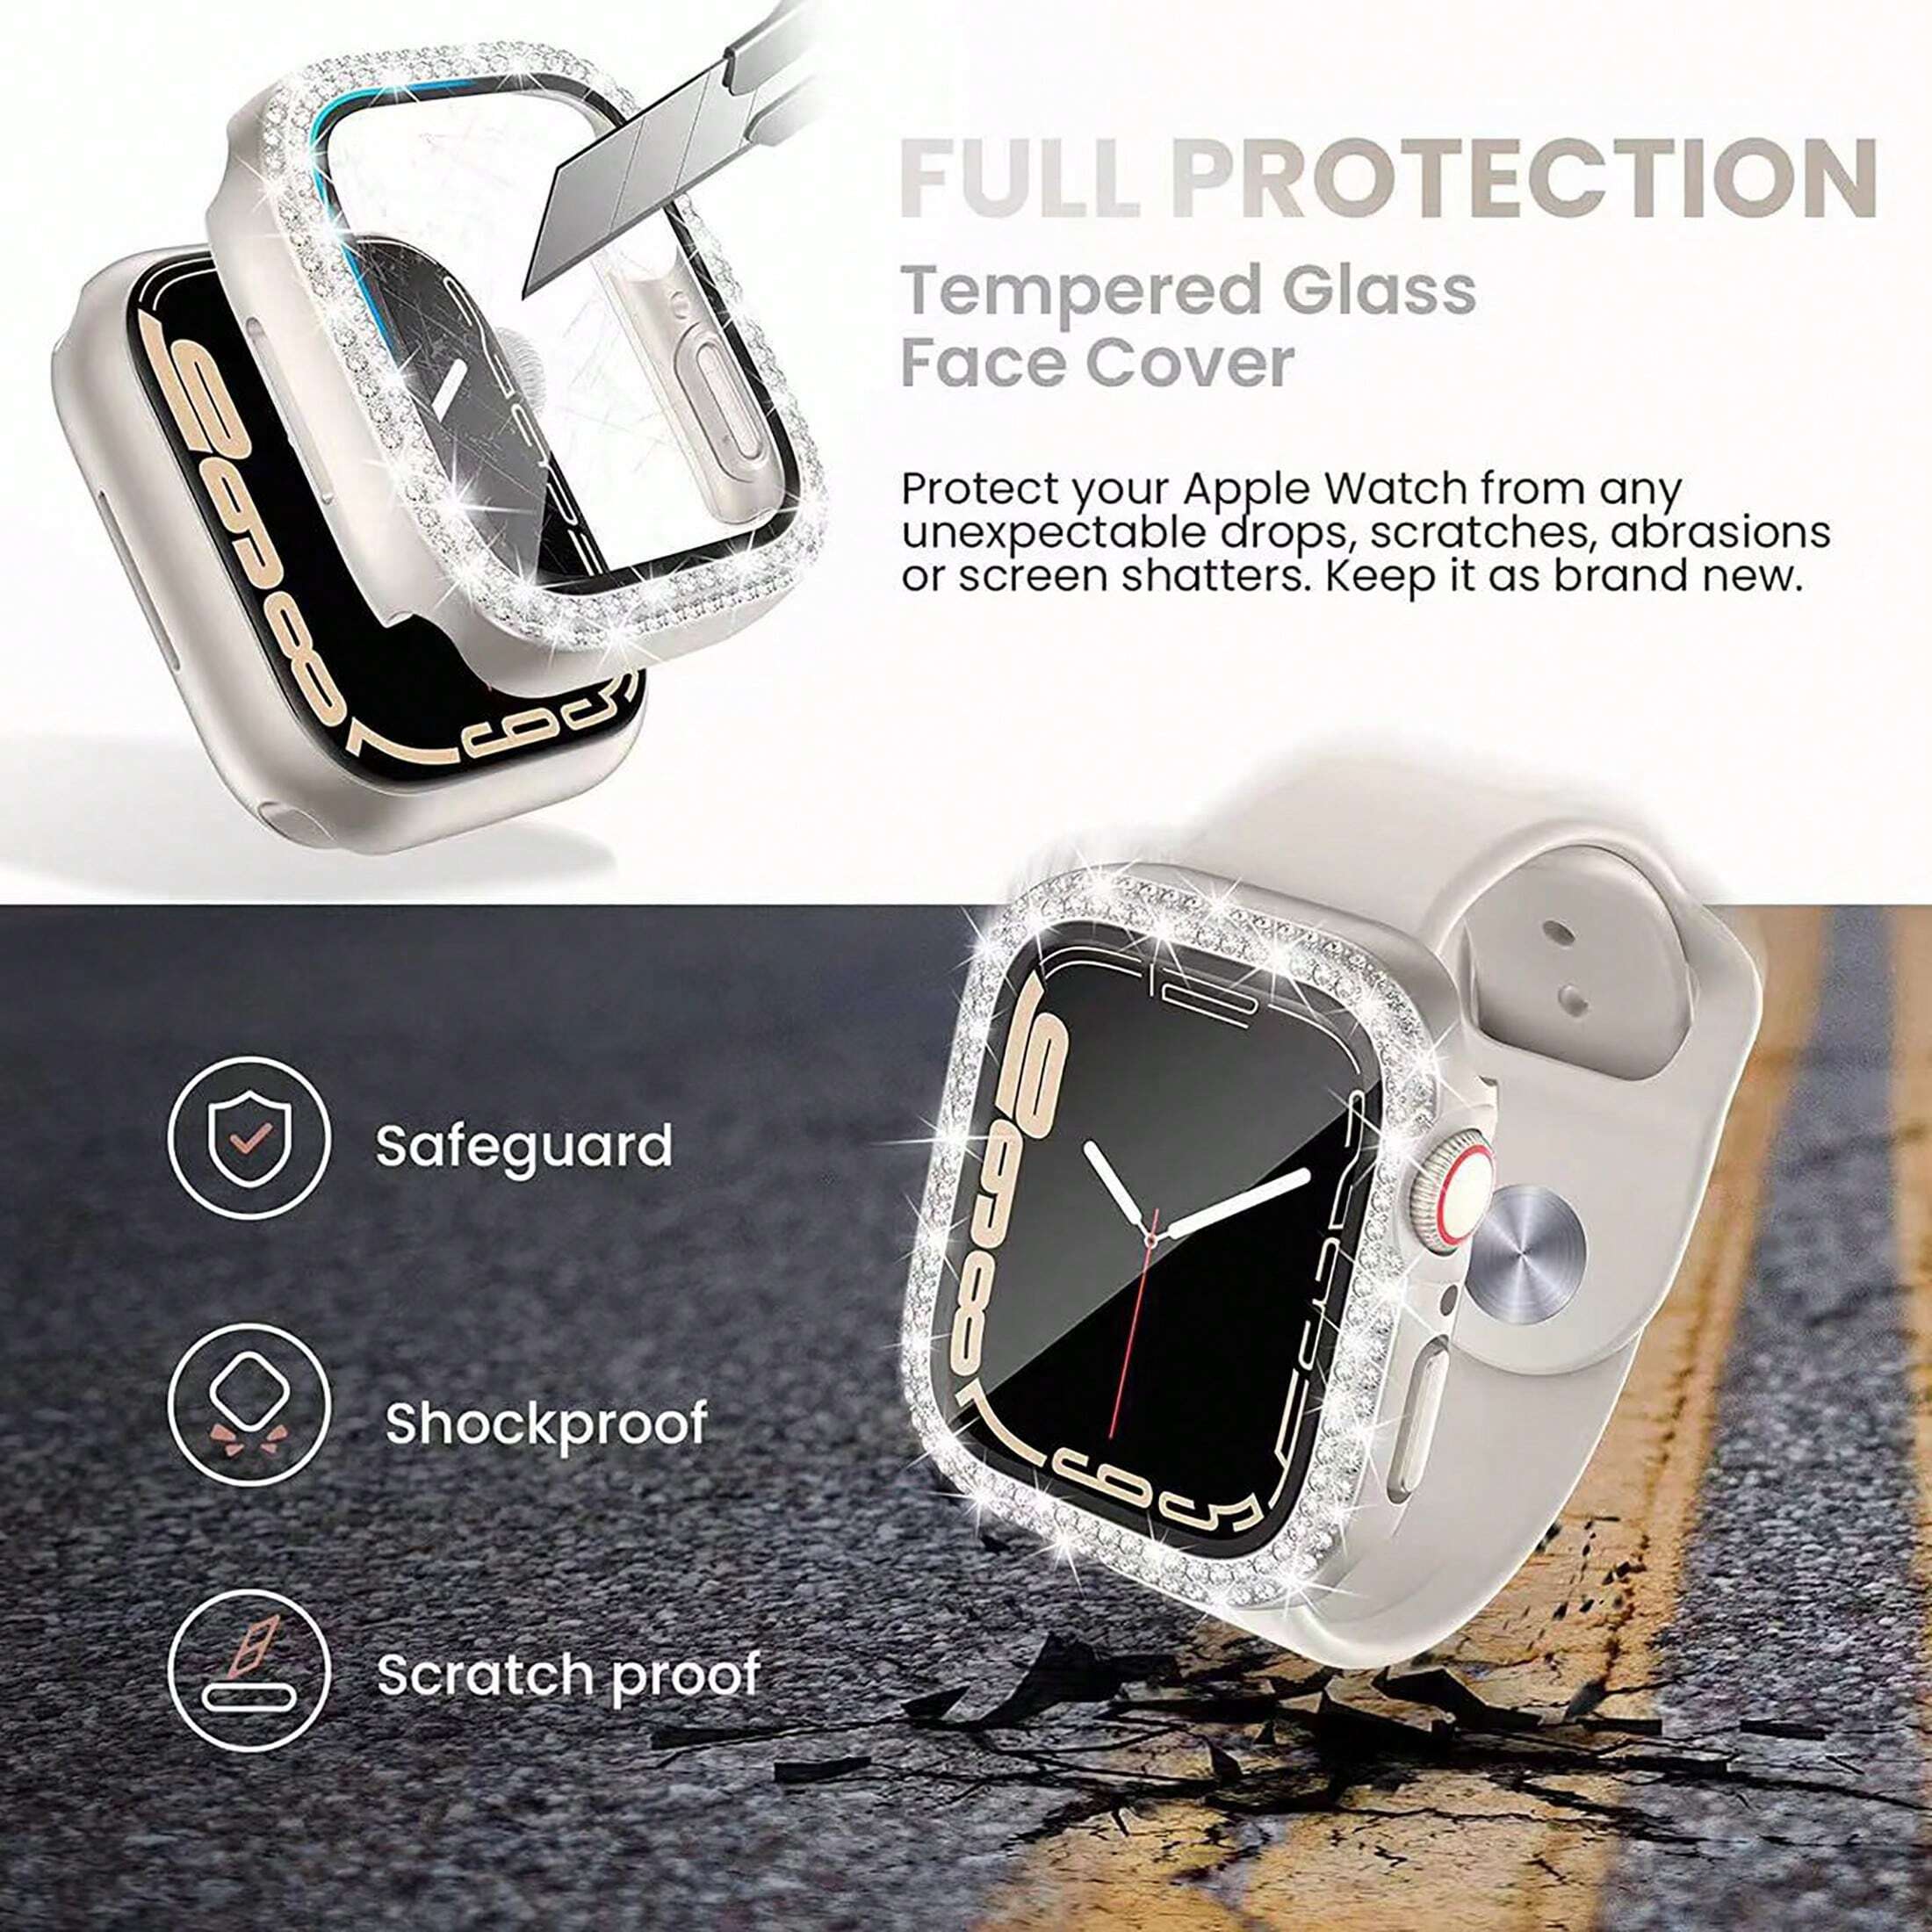 10695 b01-17 Protector Apple Watch